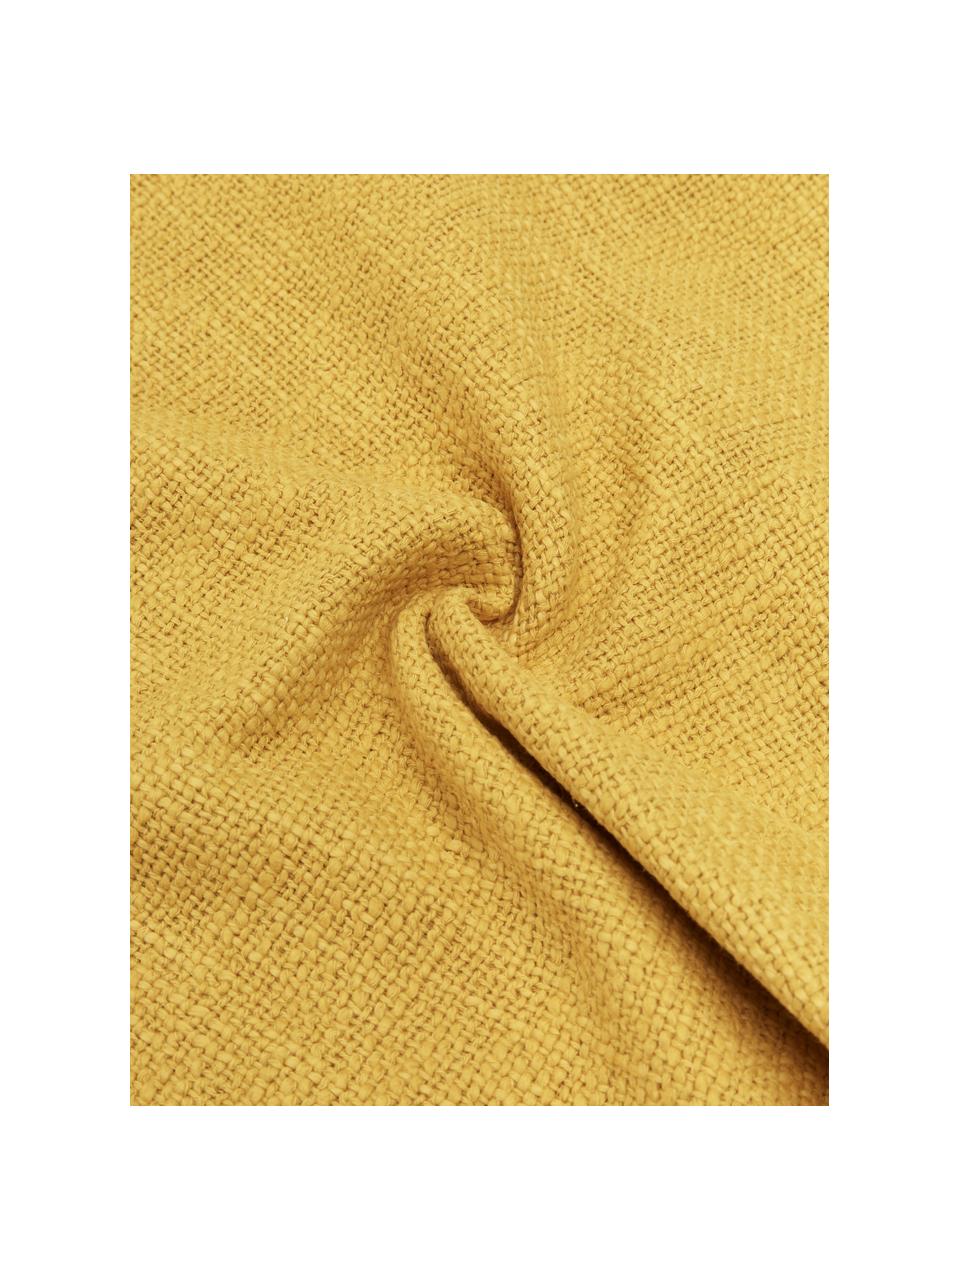 Kissenhülle Anise in Gelb, 100% Baumwolle, Gelb, B 45 x L 45 cm